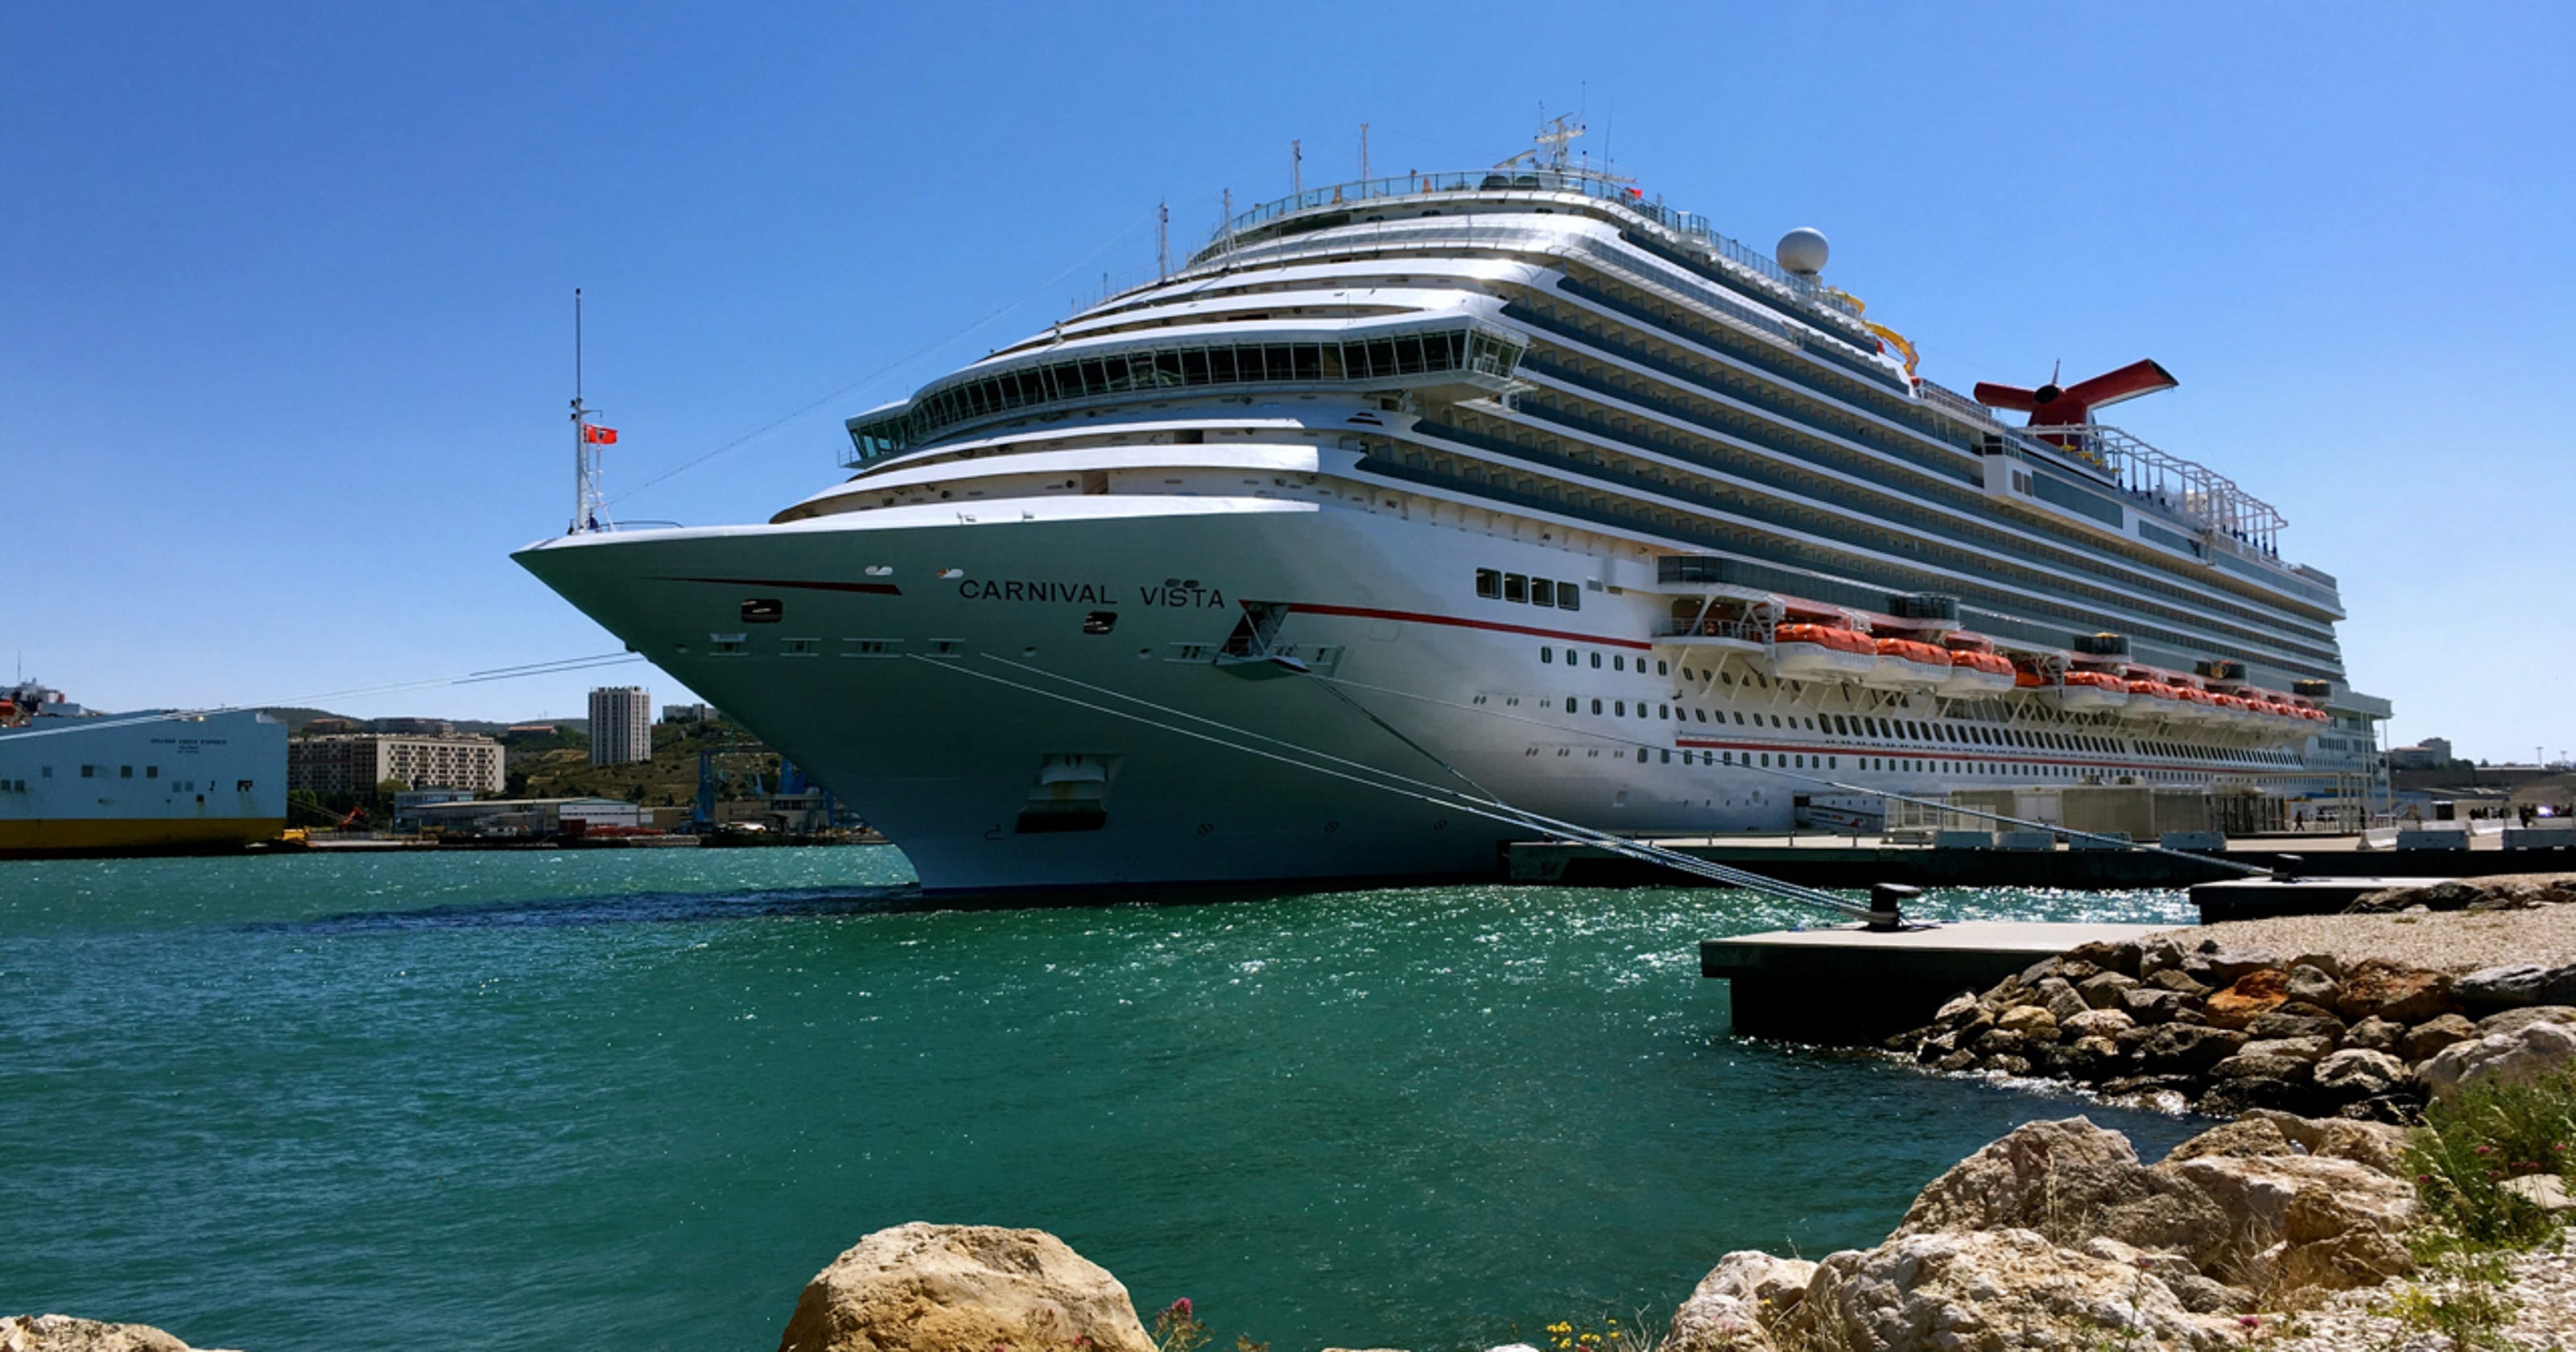 caribbean vista cruise ship